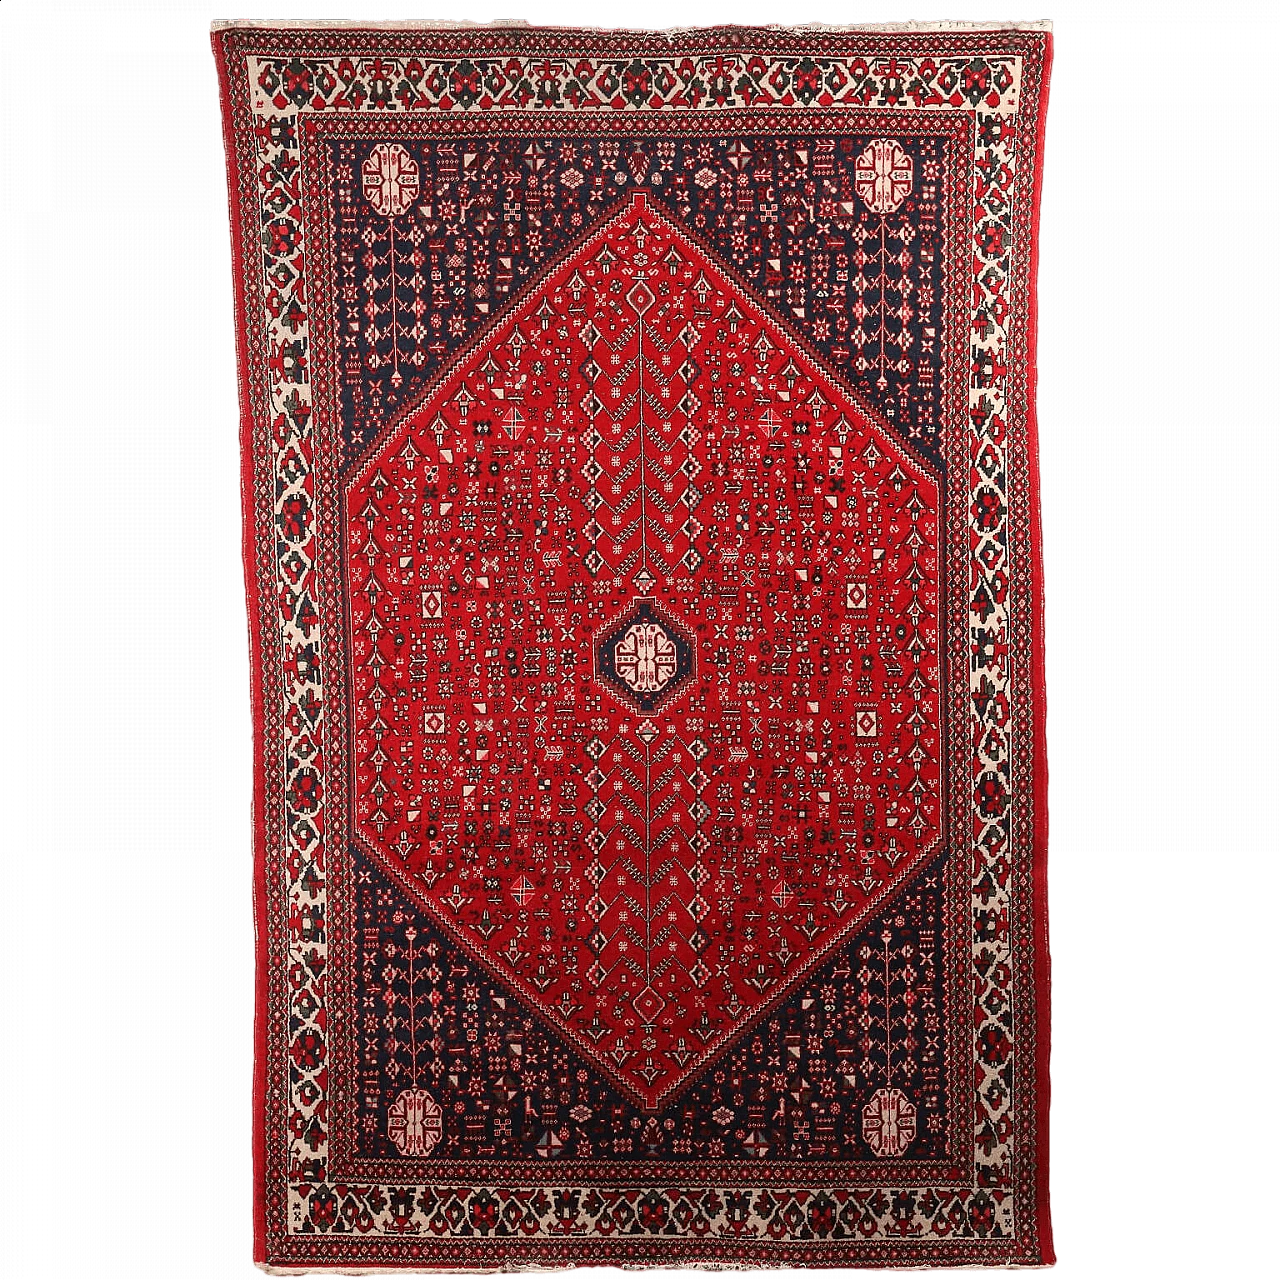 Iranian cotton and wool Kaskay rug 11